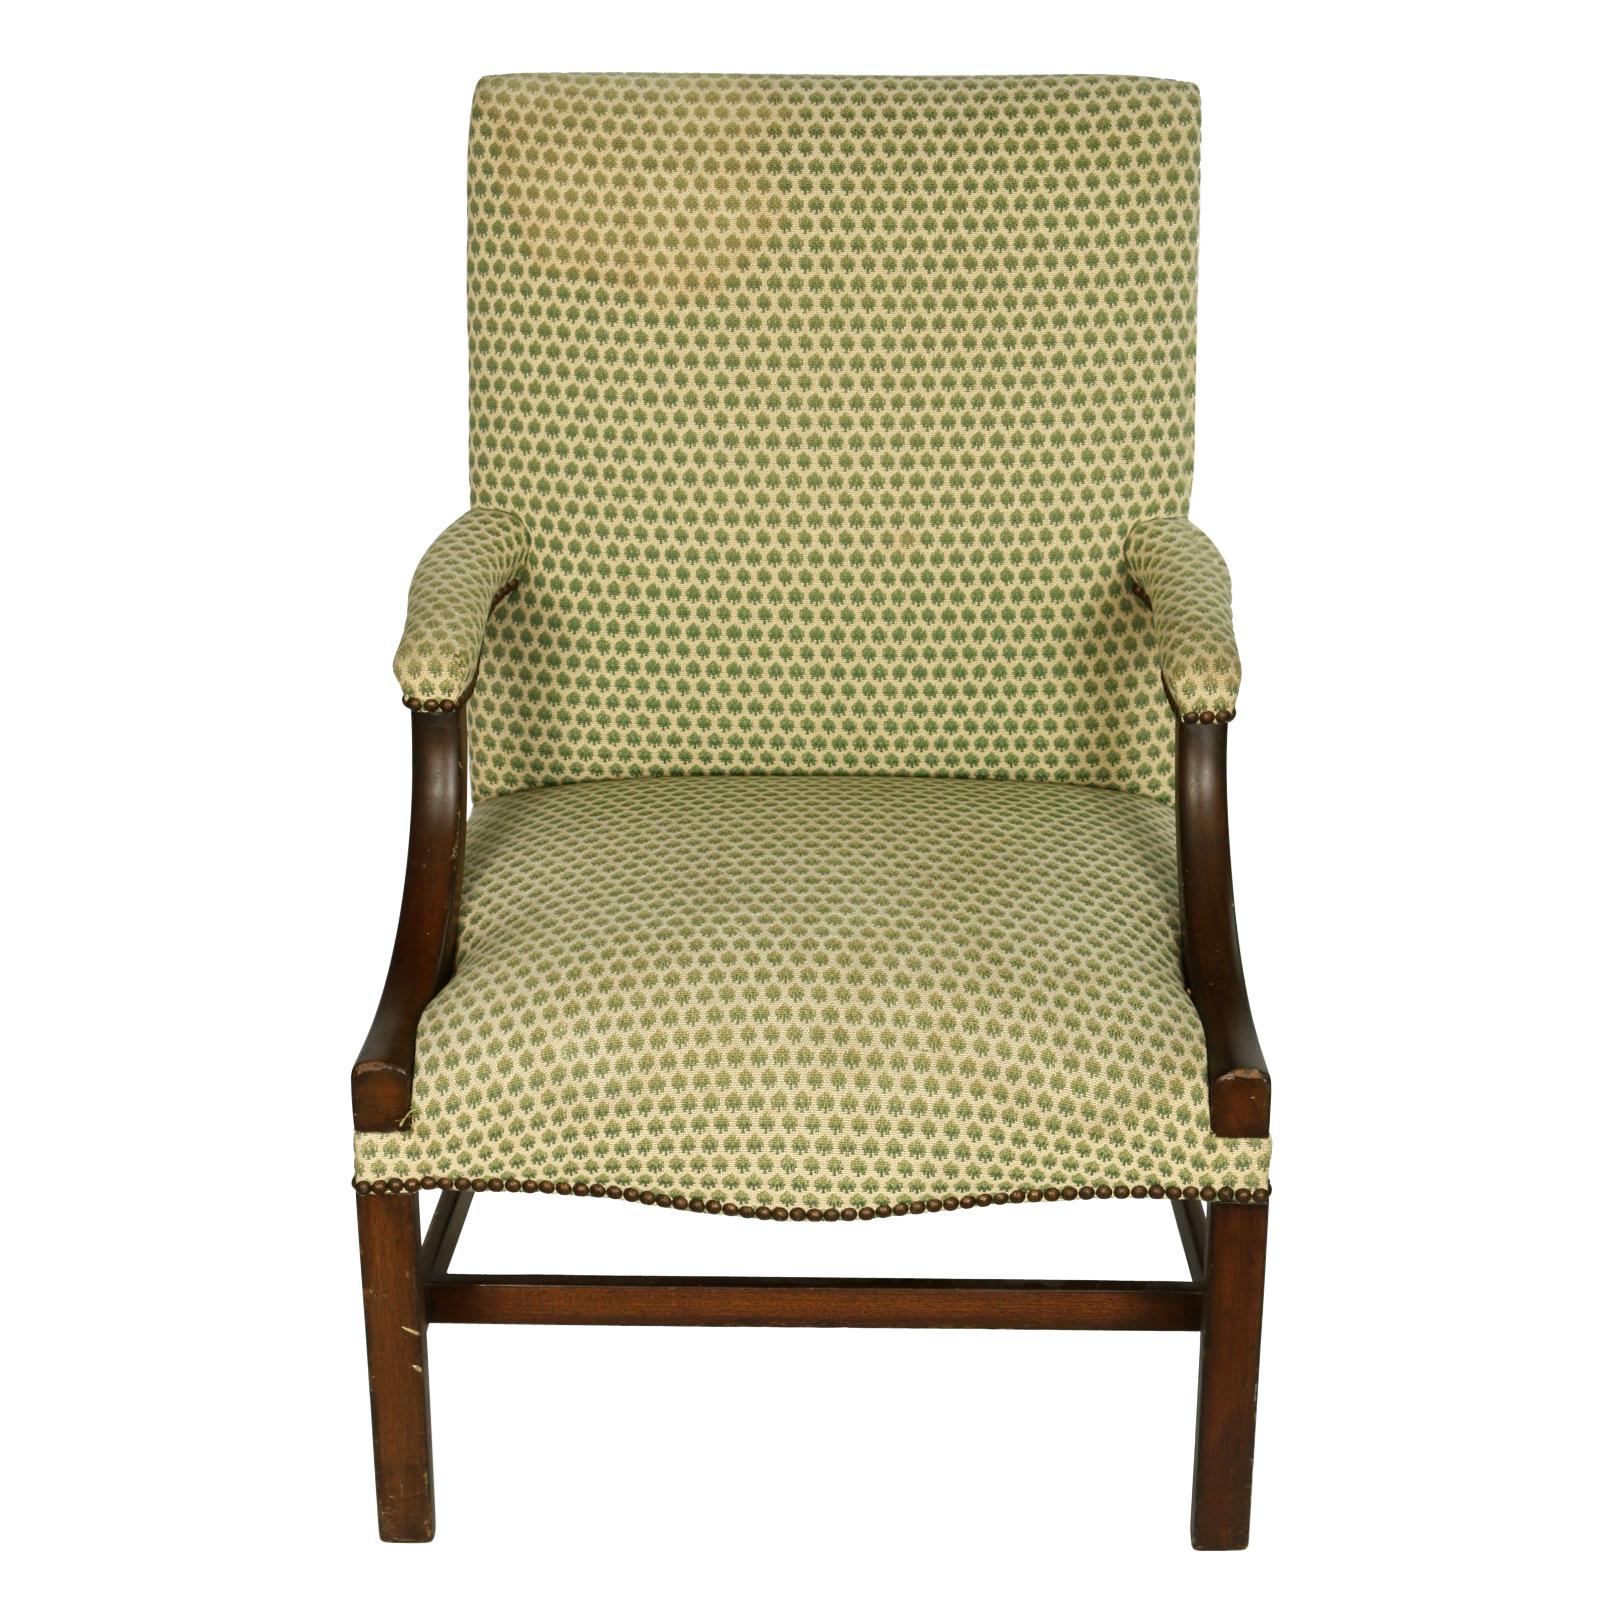 English George III Style Upholstered Armchair